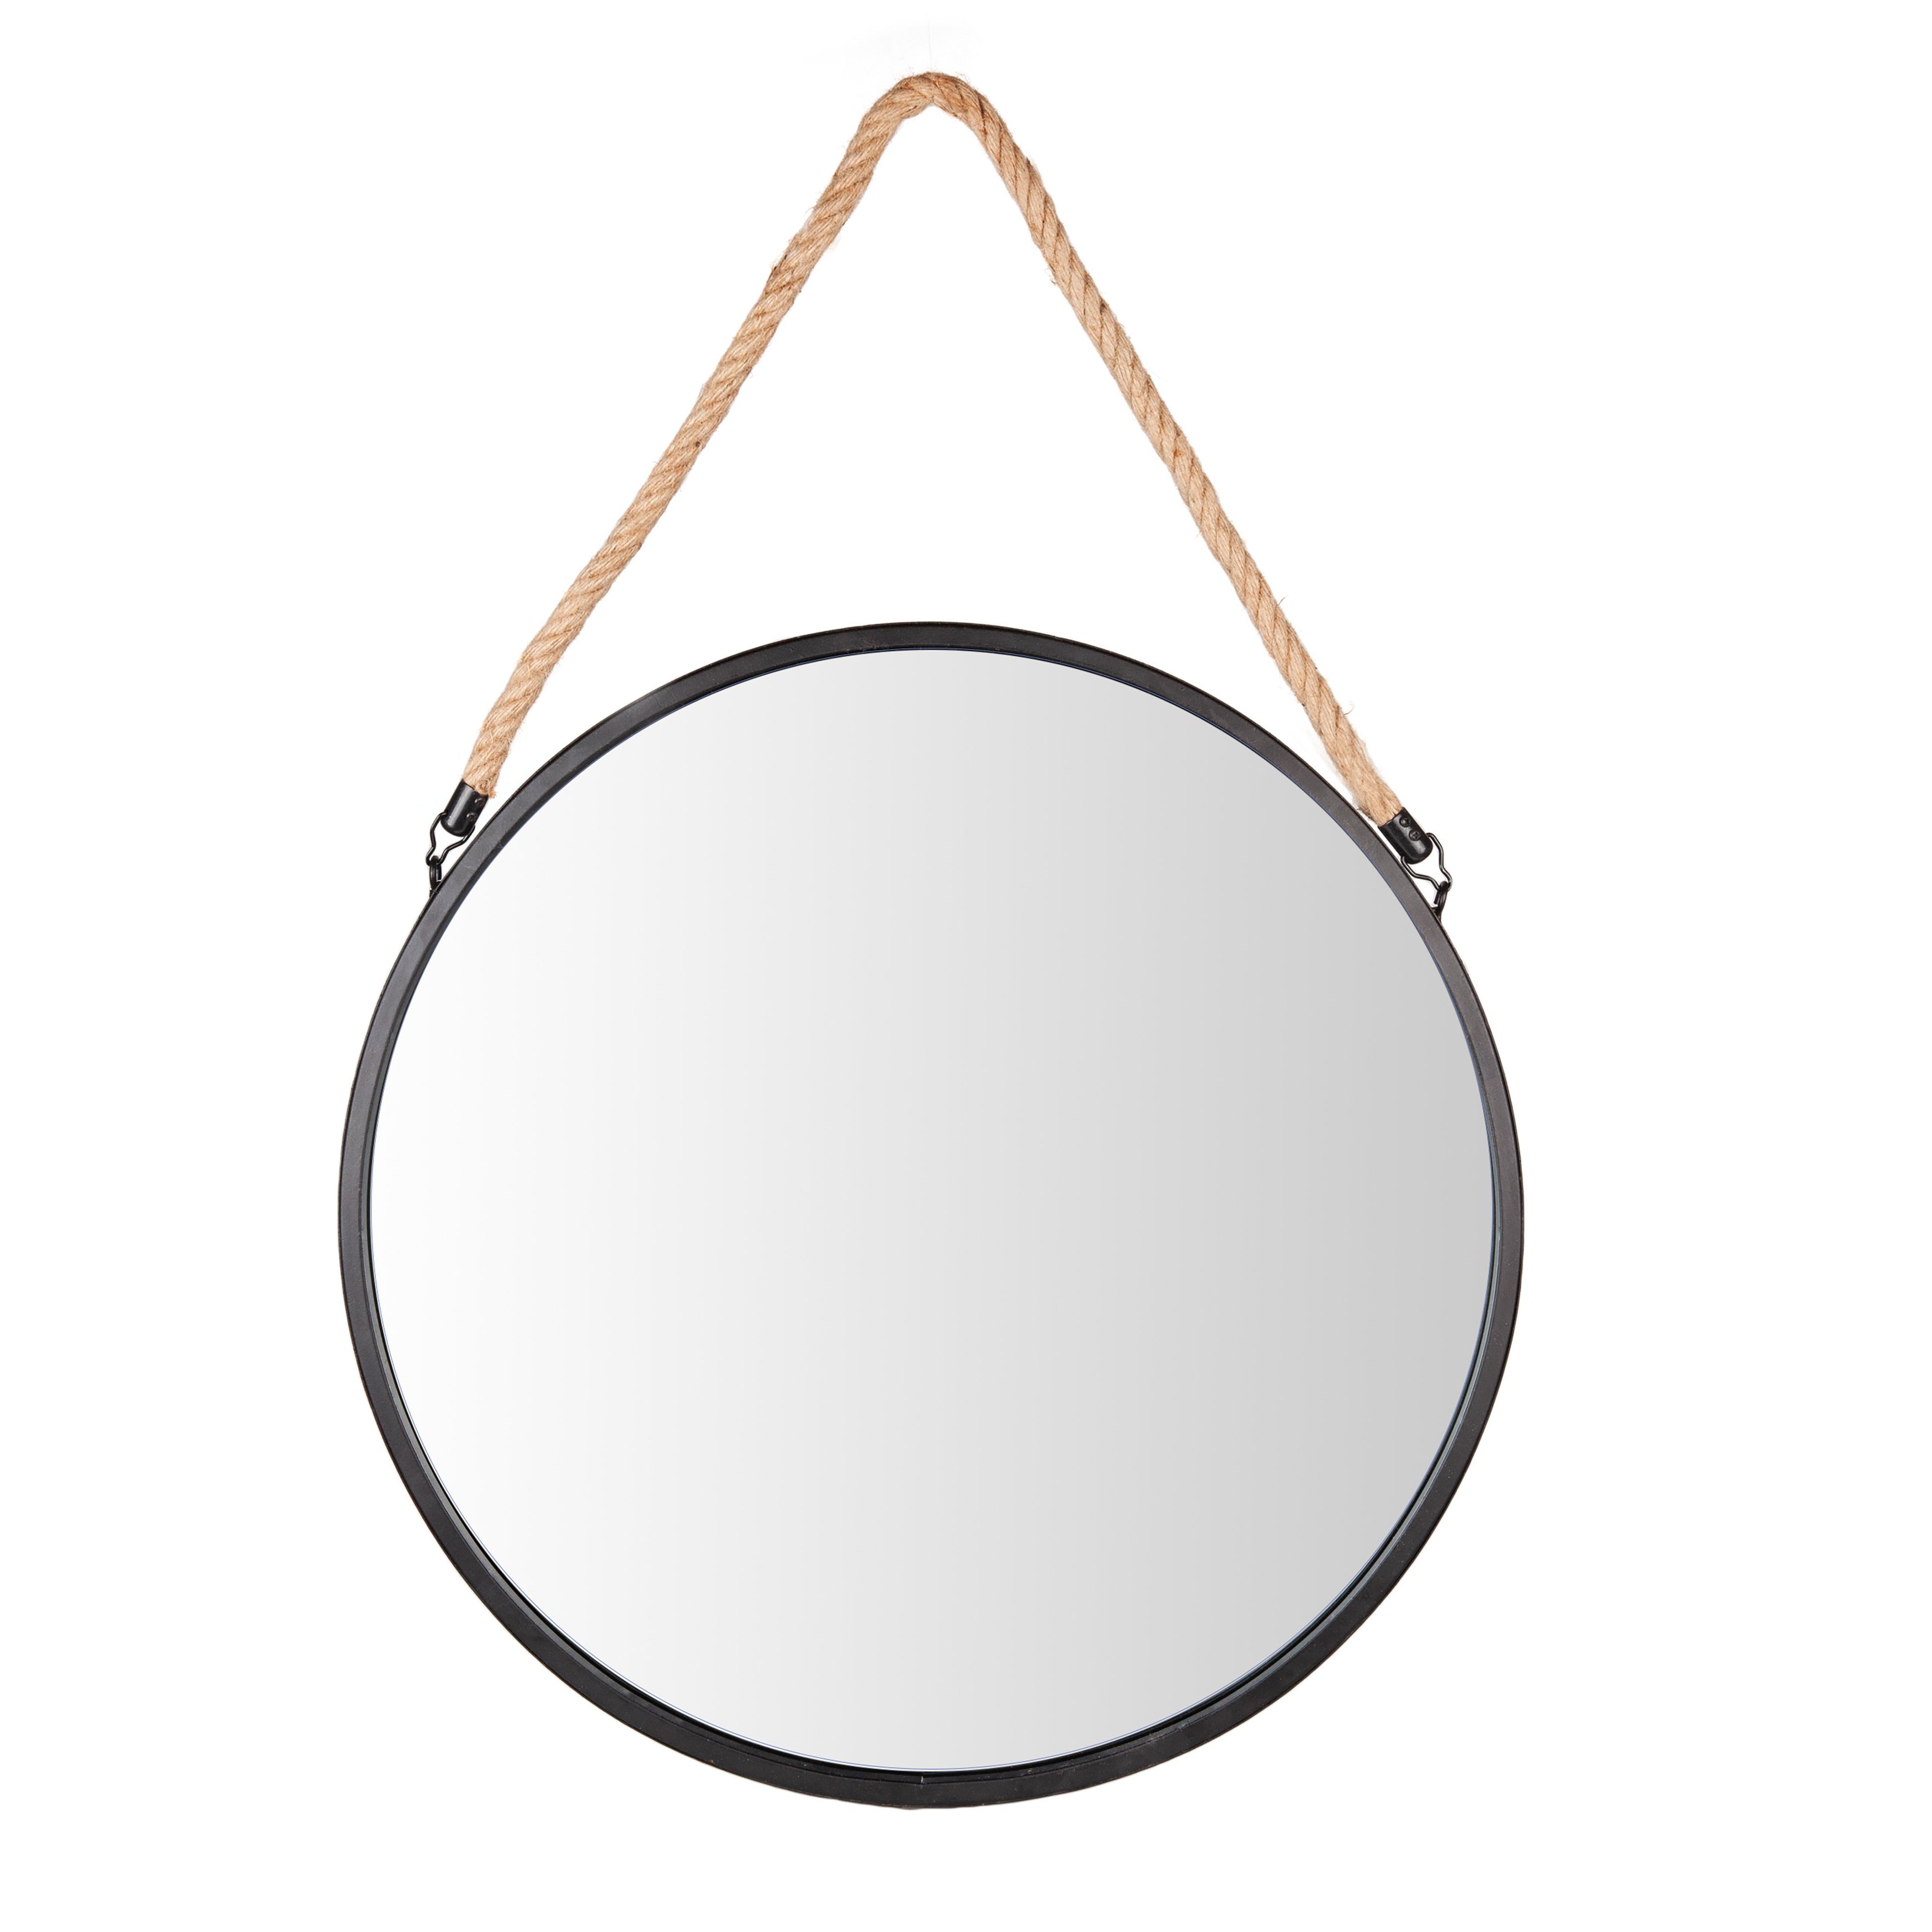 Rumfelt Decorative Round Metal Wall Mirror With Regard To Newest Decorative Round Wall Mirrors (View 20 of 20)